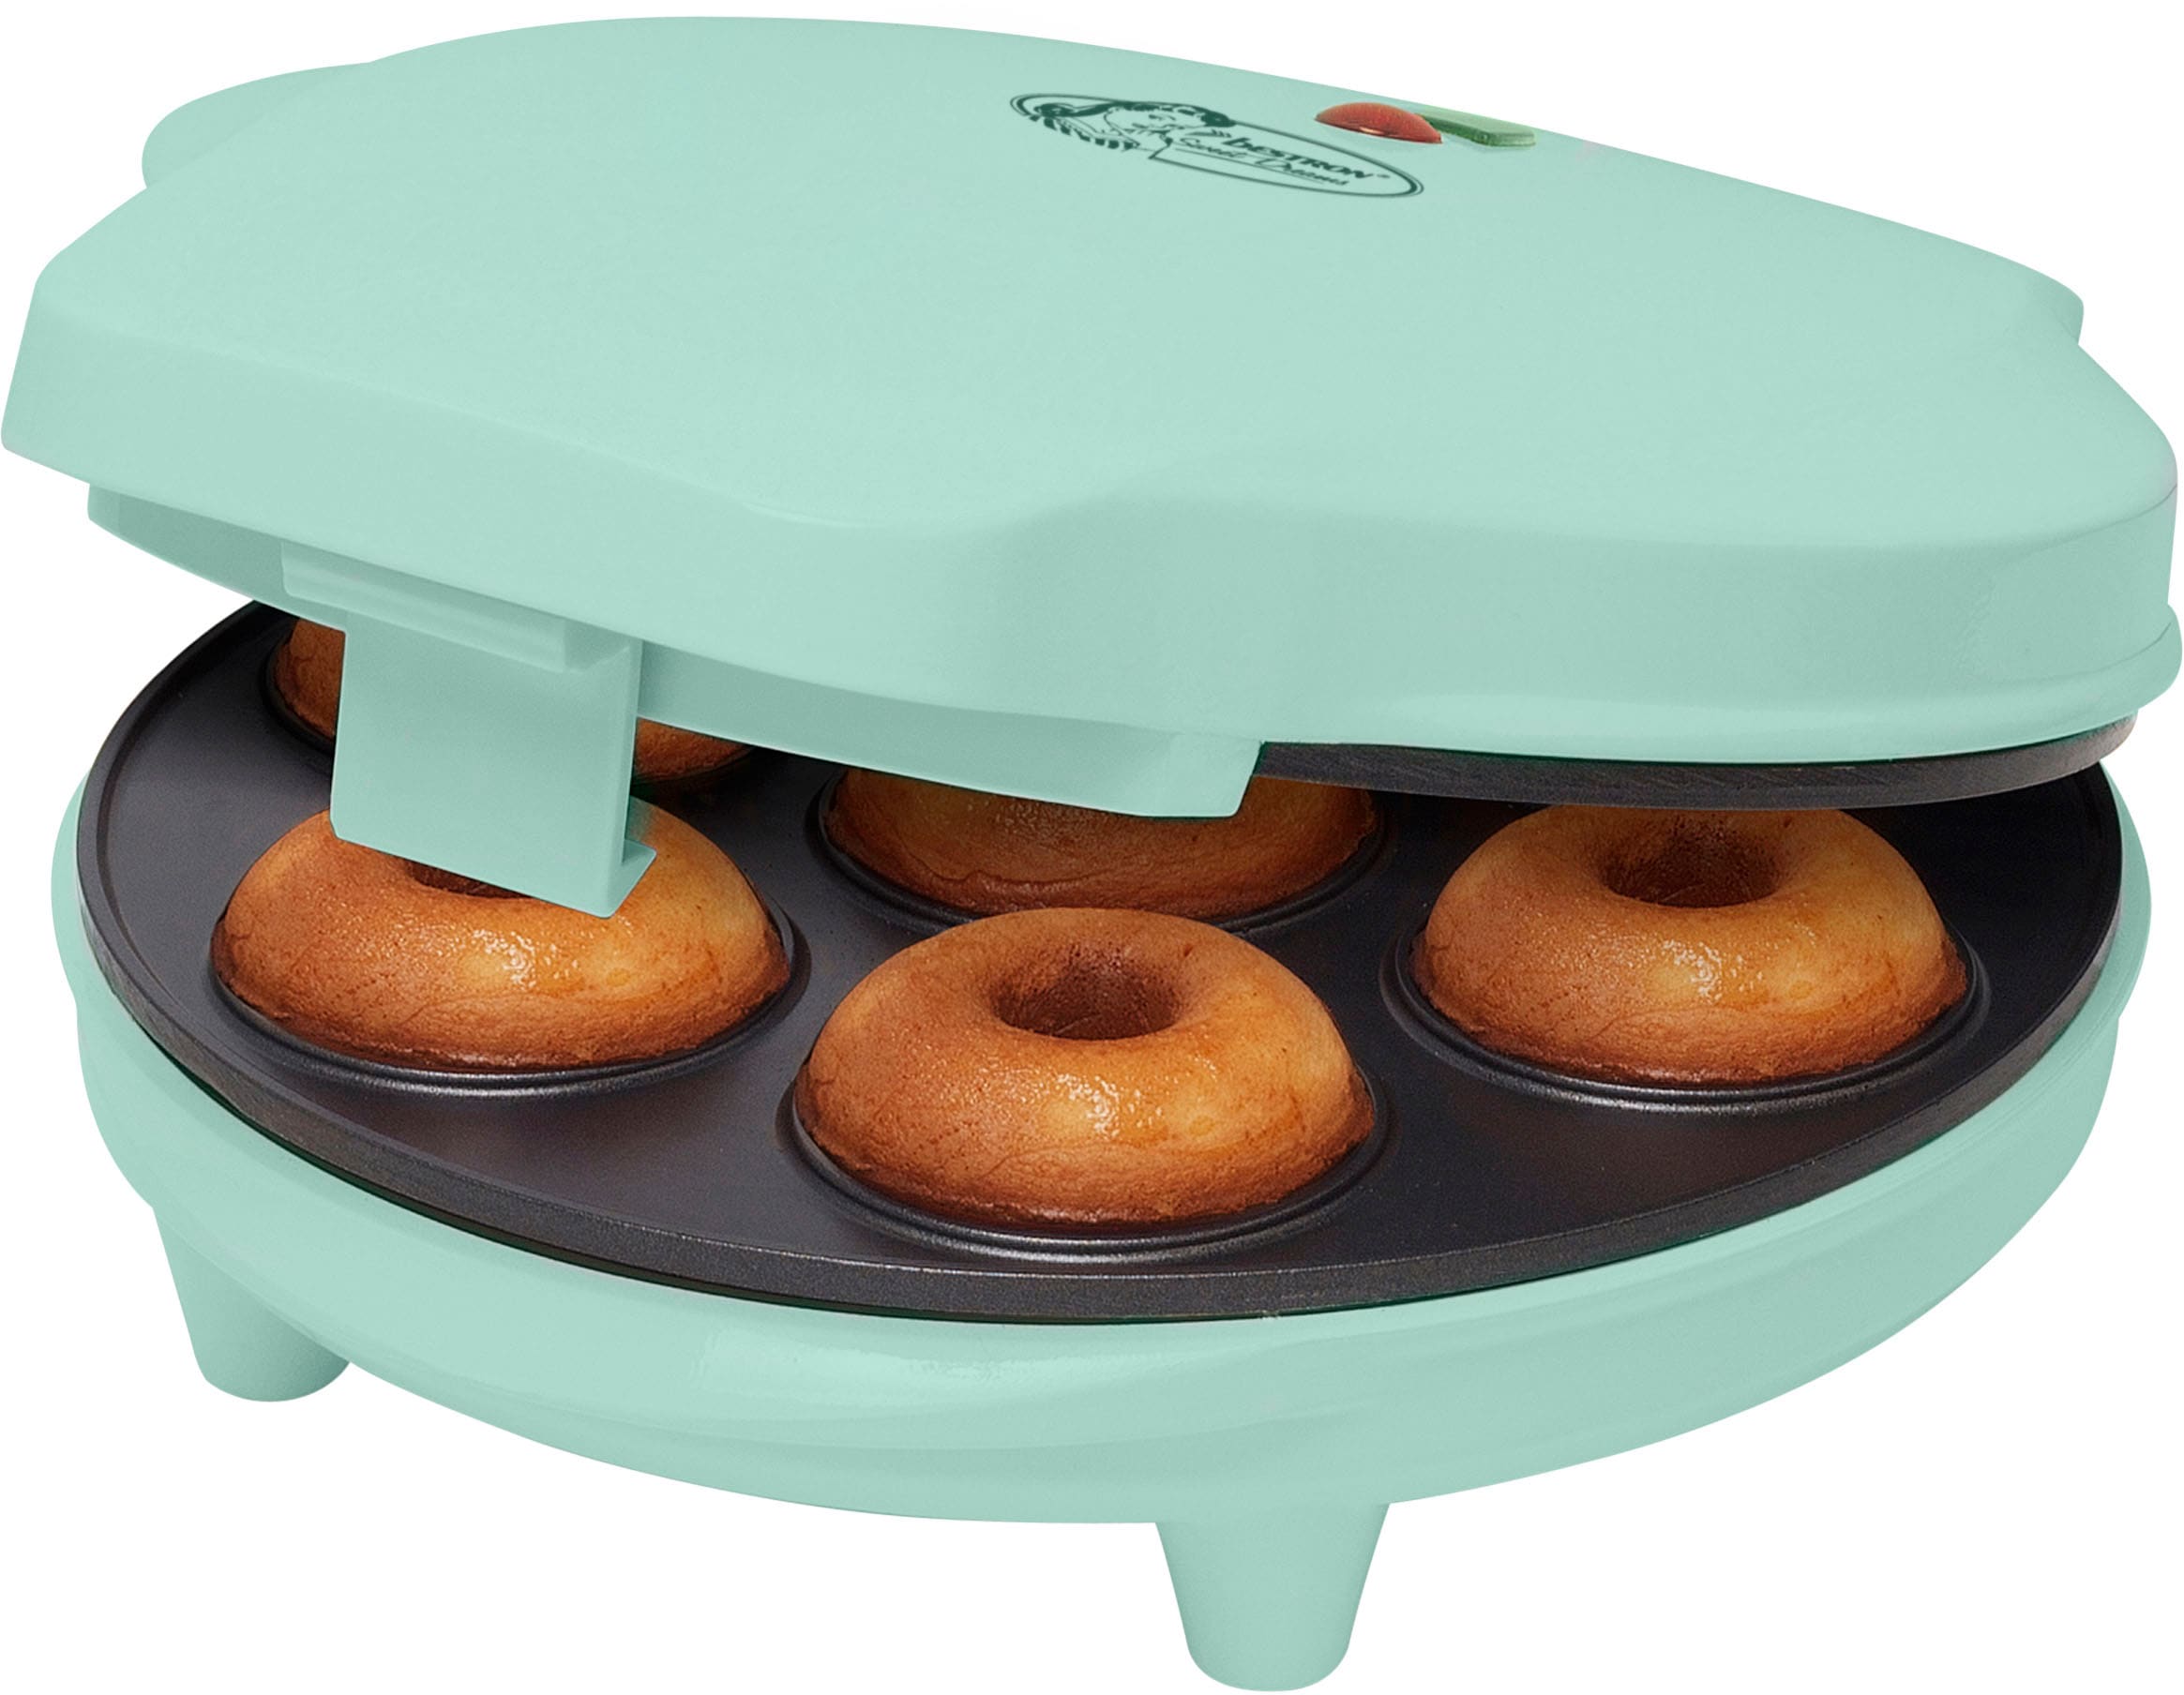 Donut-Maker »ADM218SDM Sweet Dreams«, 700 W, im Retro Design, Antihaftbeschichtung,...